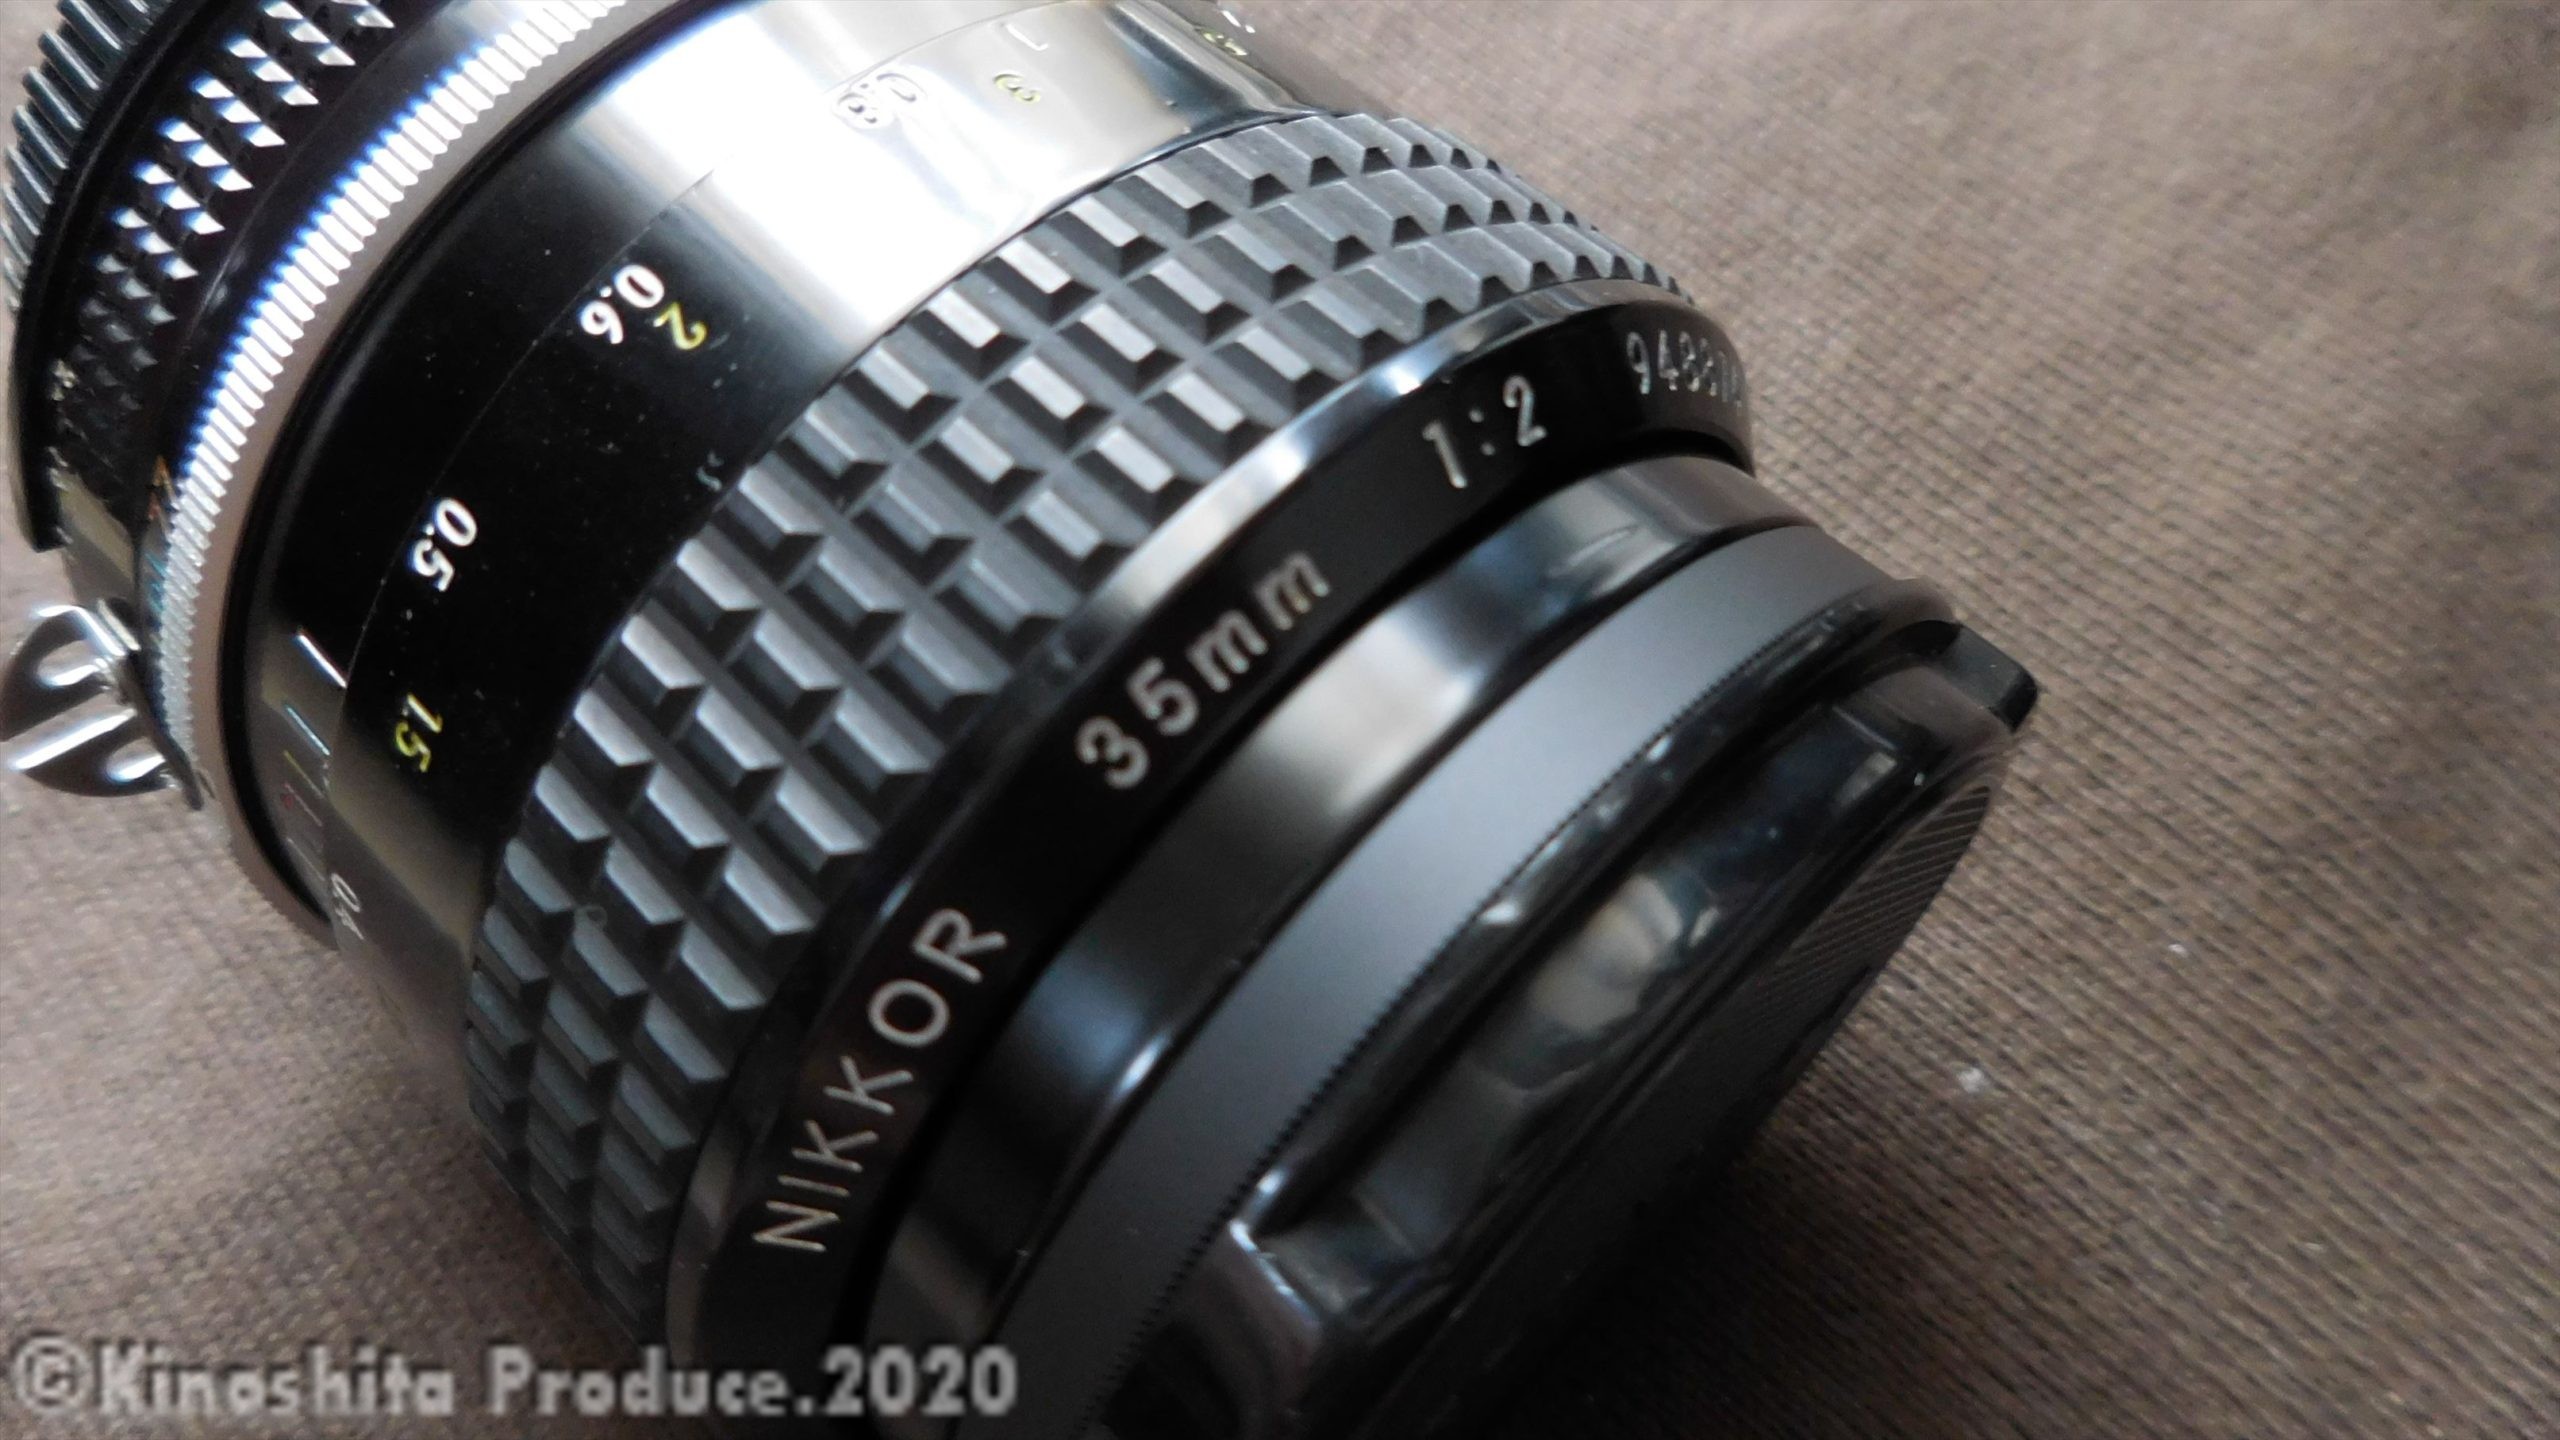 Nikon オールドマニュアルレンズ Ai Nikkor 35mm f/1.4S